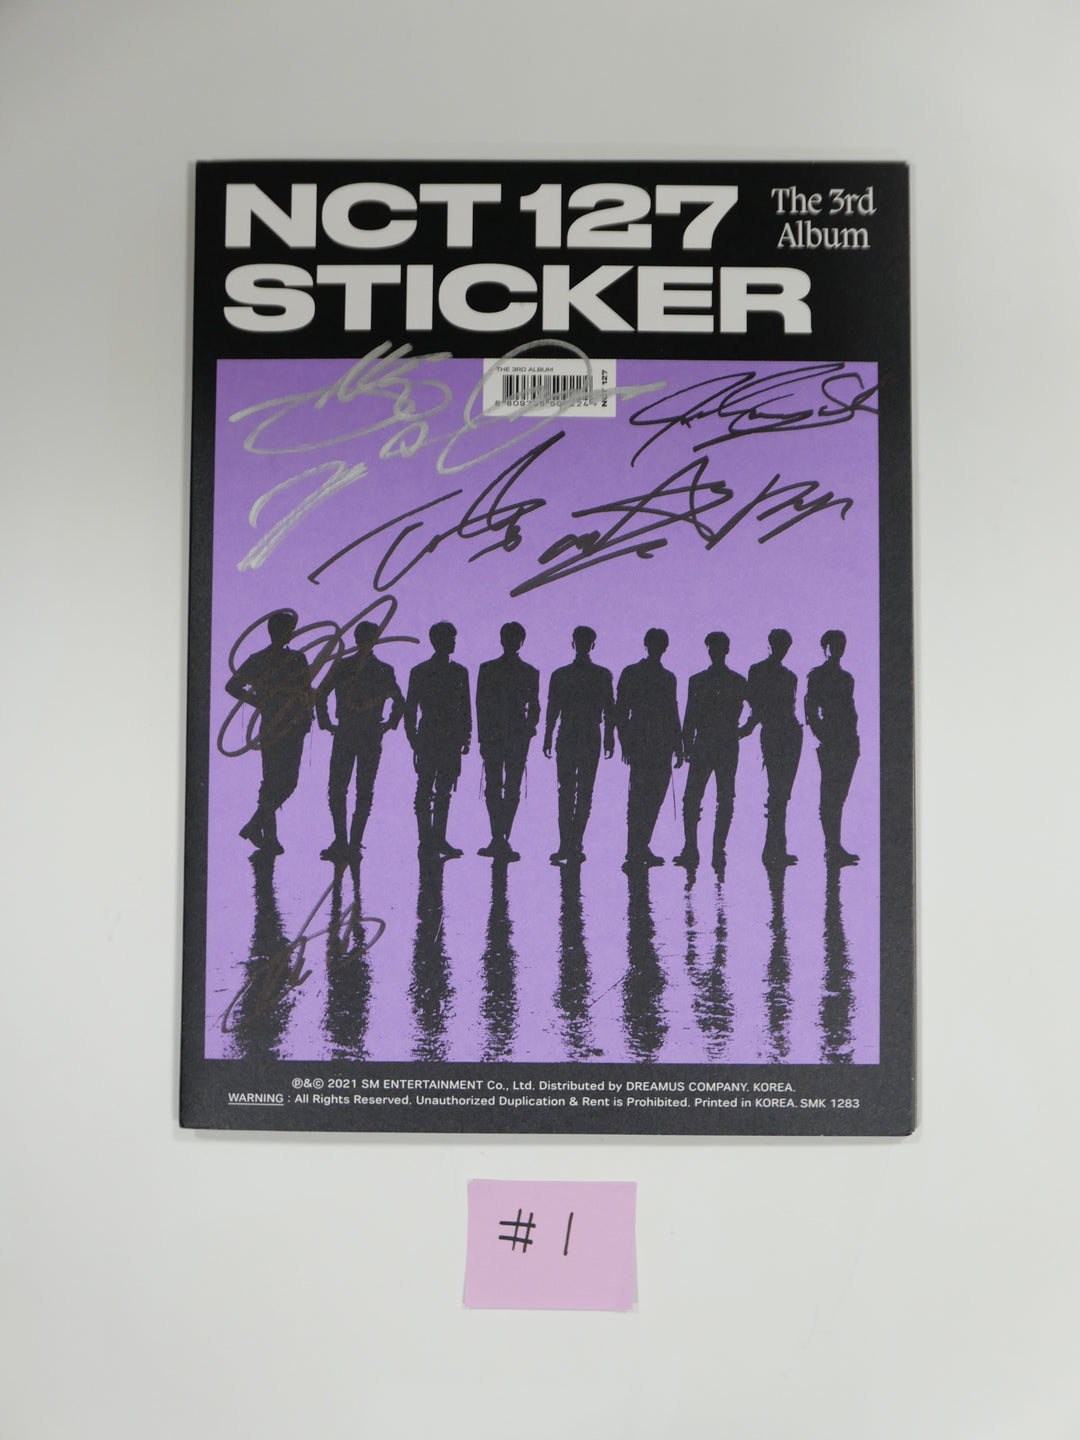 NCT 127 "Sticker" 3rd Album - Hand Autographed(Signed) Promo Album